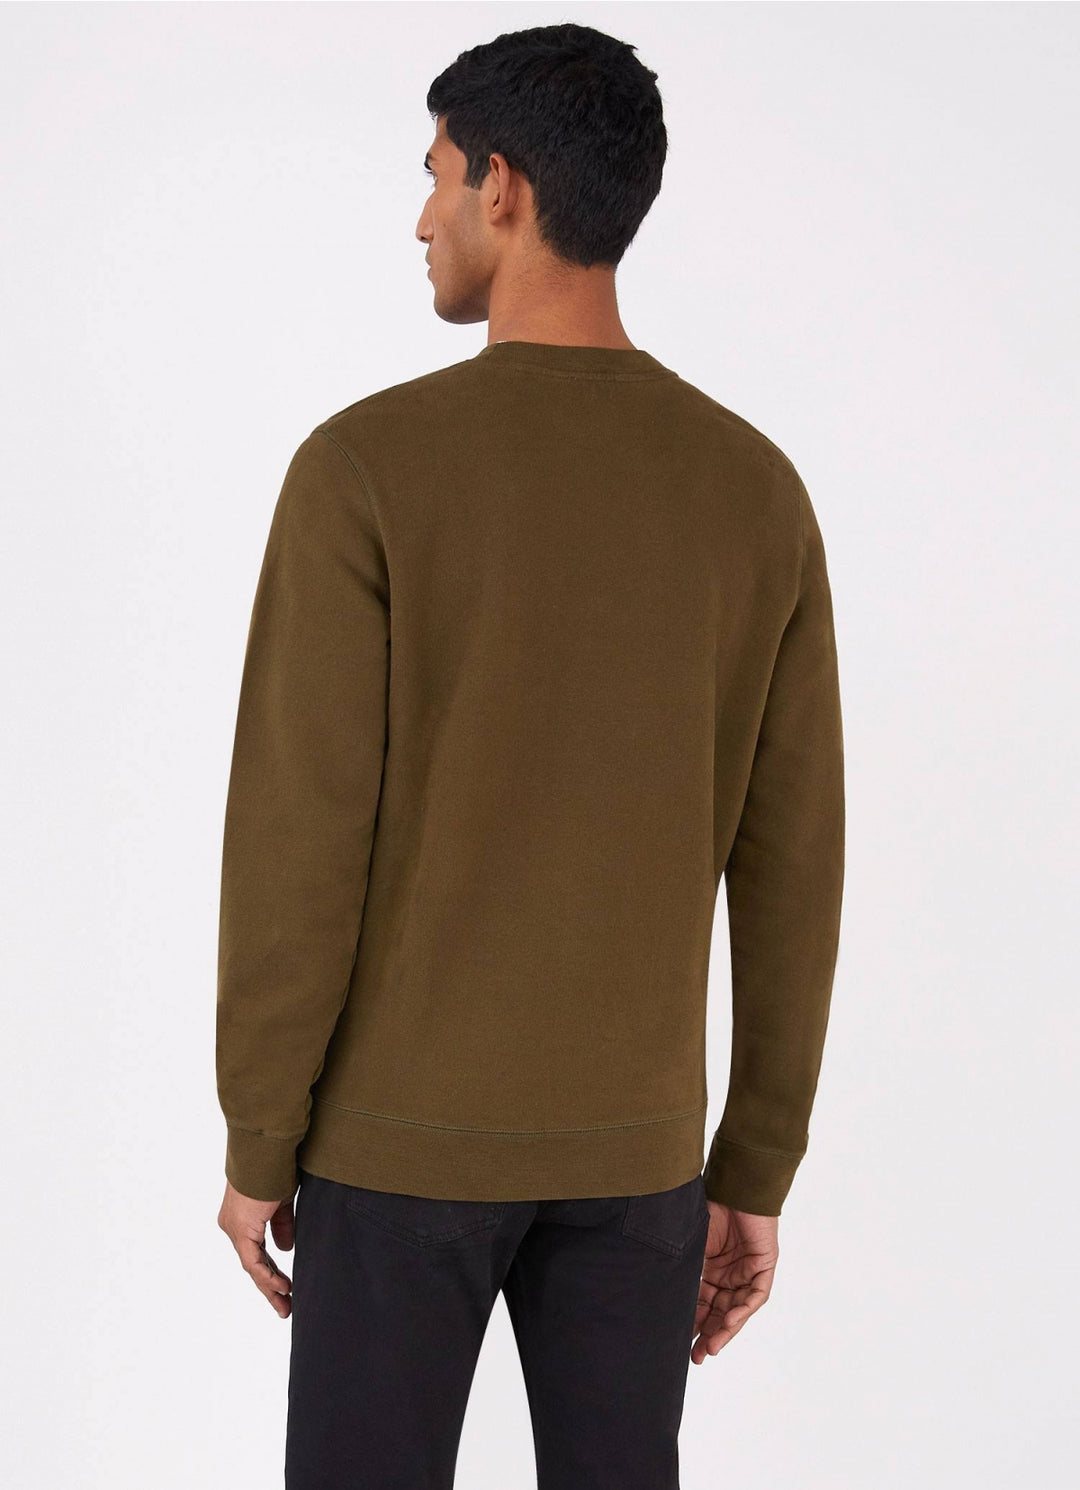 Loopback Sweatshirt - Dark Moss - sale